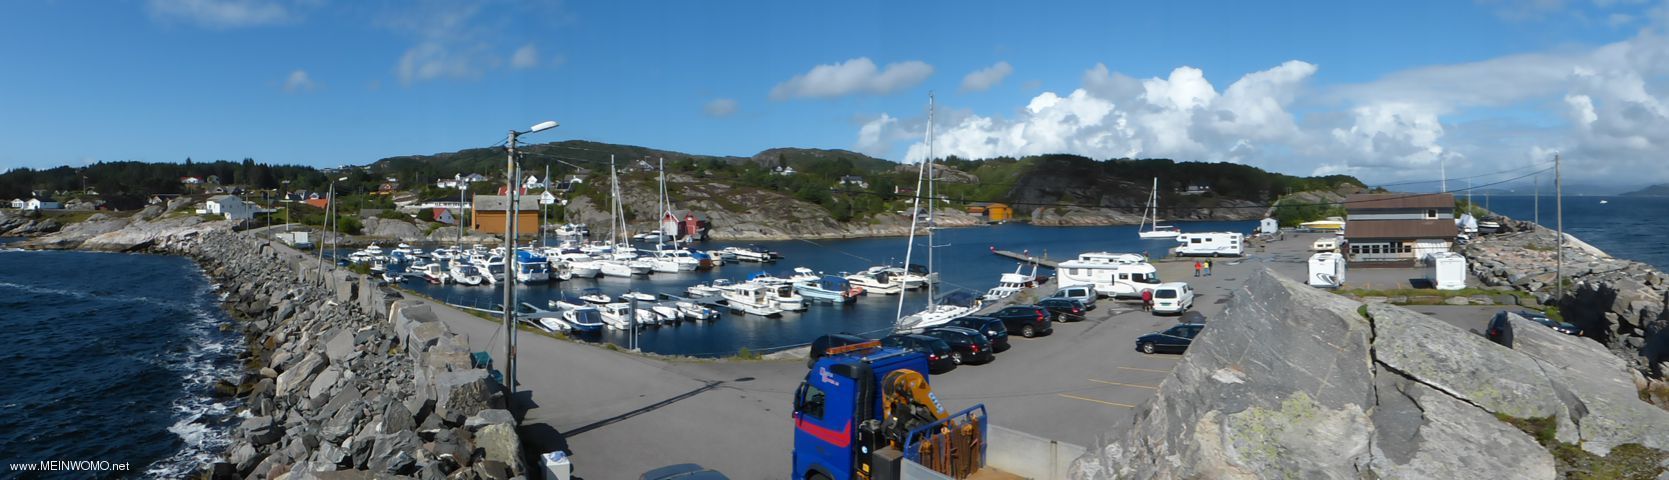  Vista panoramica sul porto.